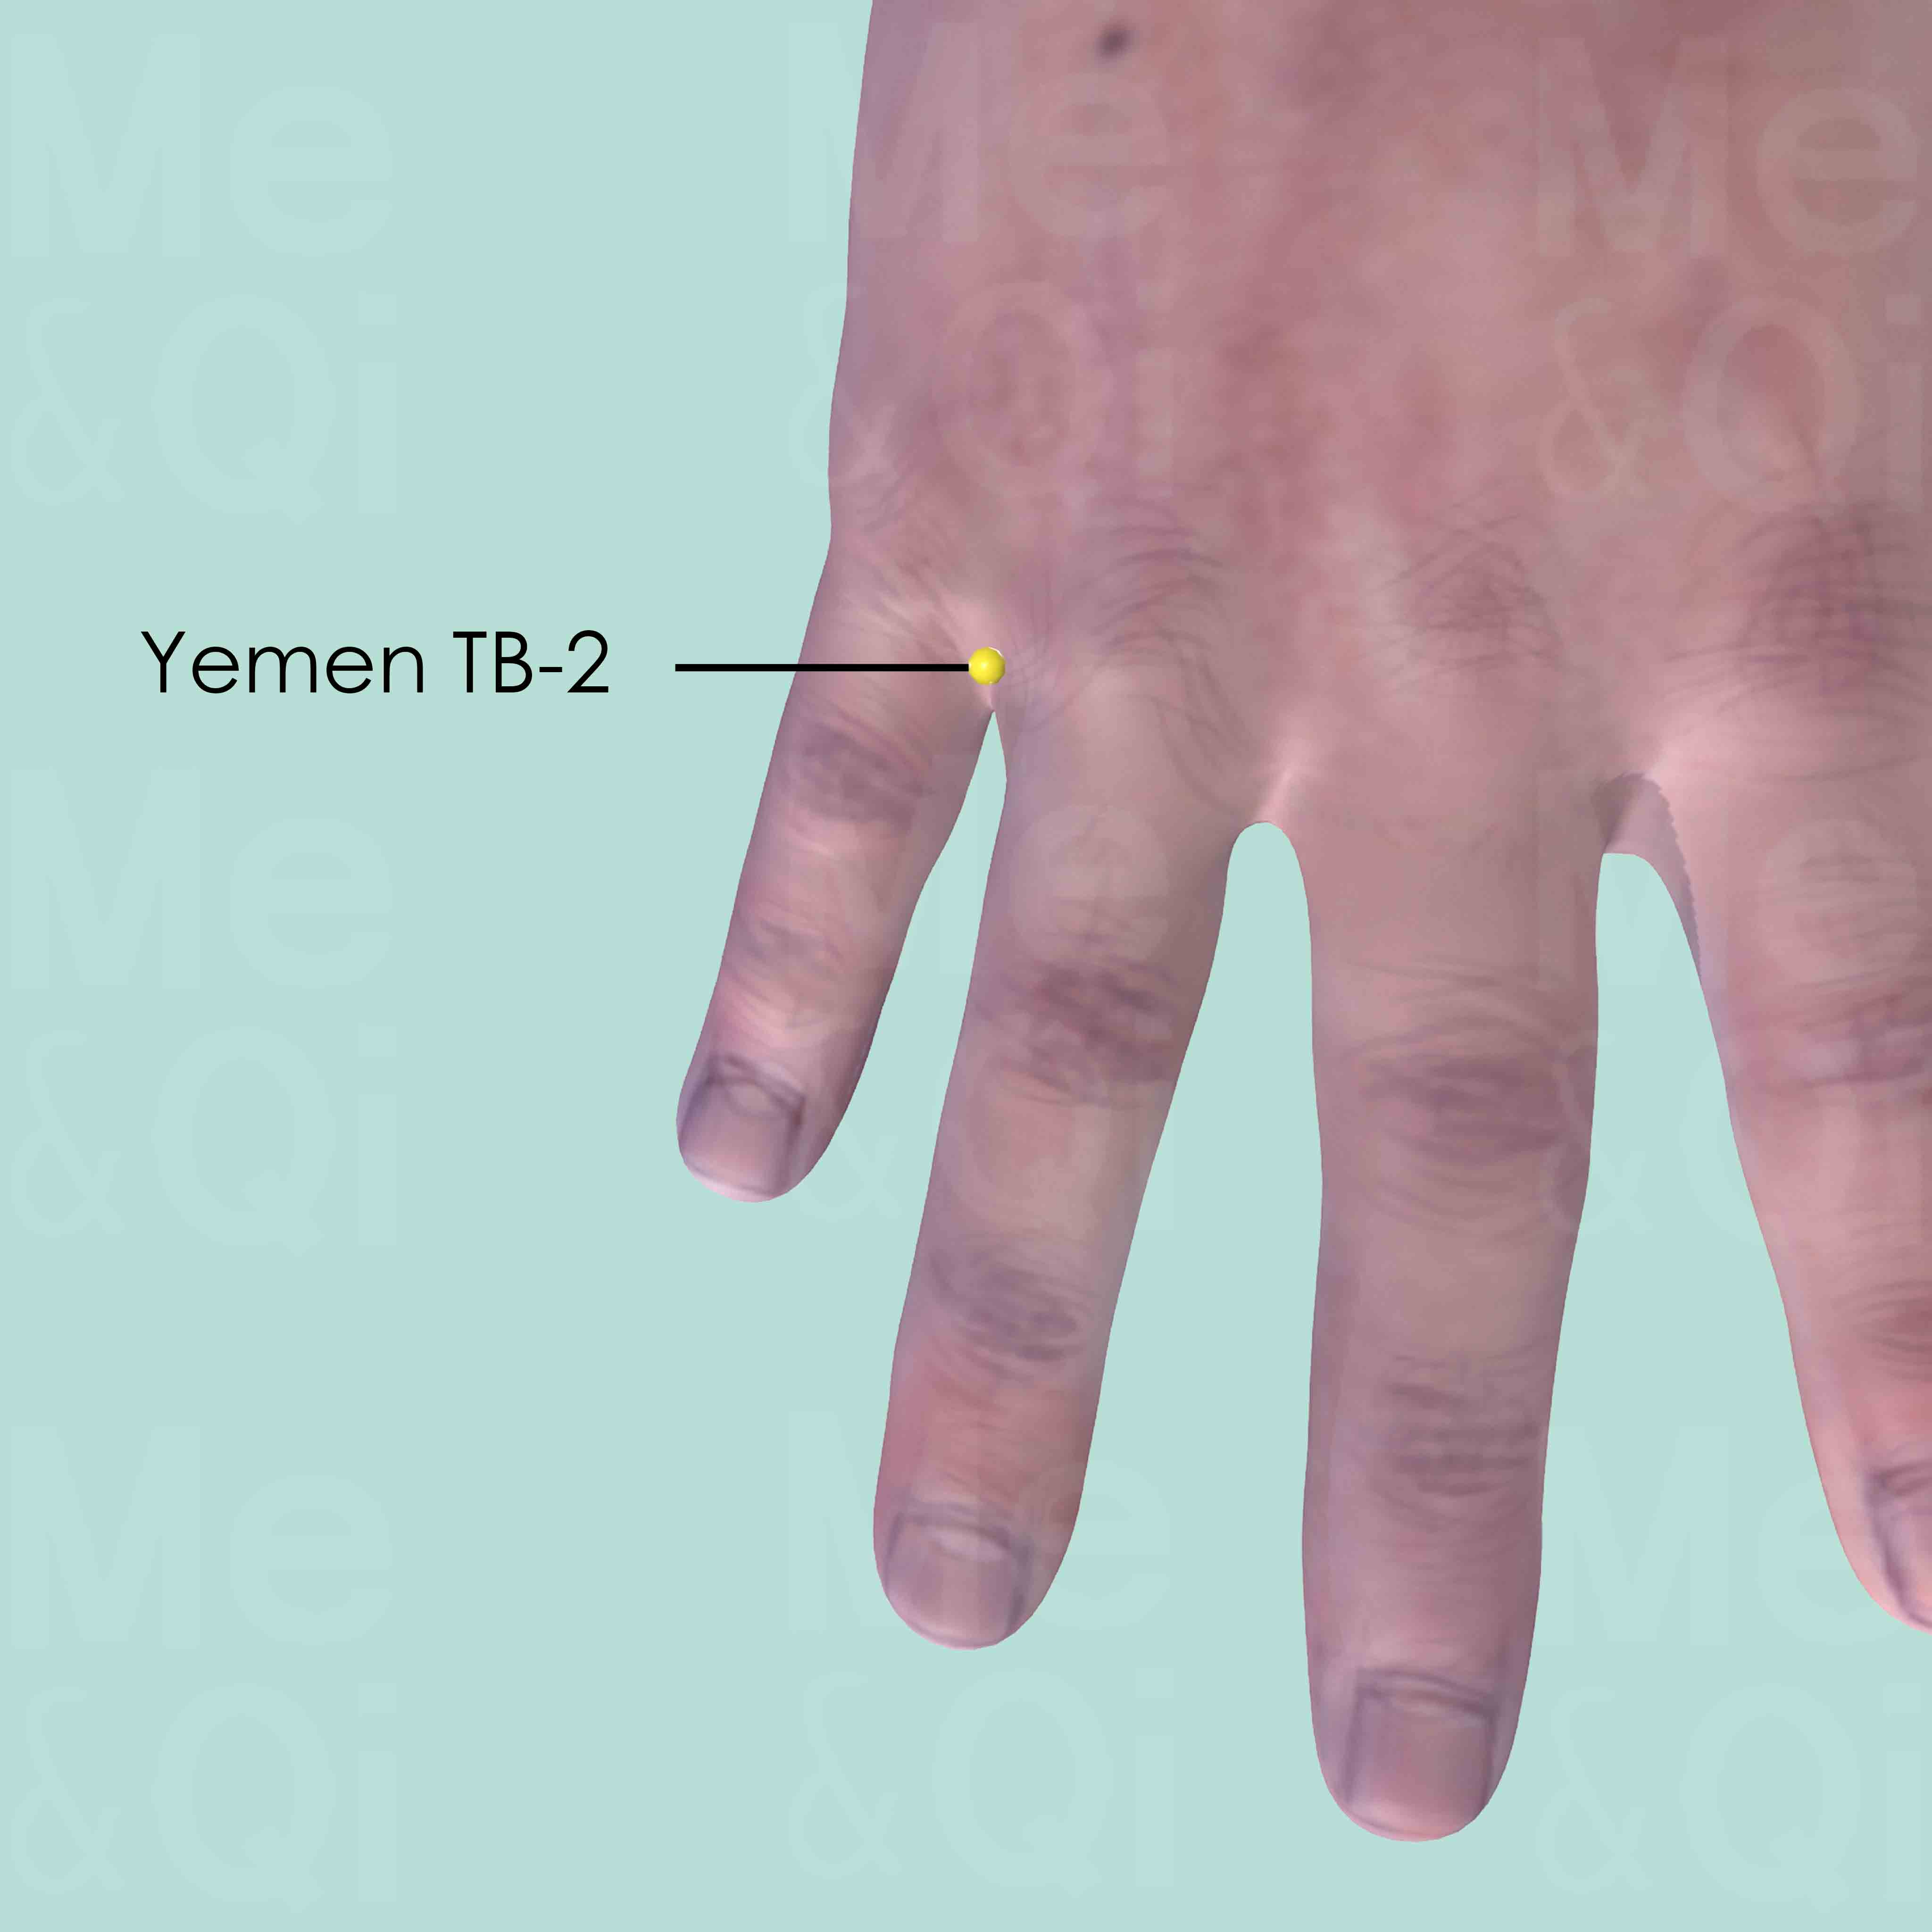 Yemen TB-2